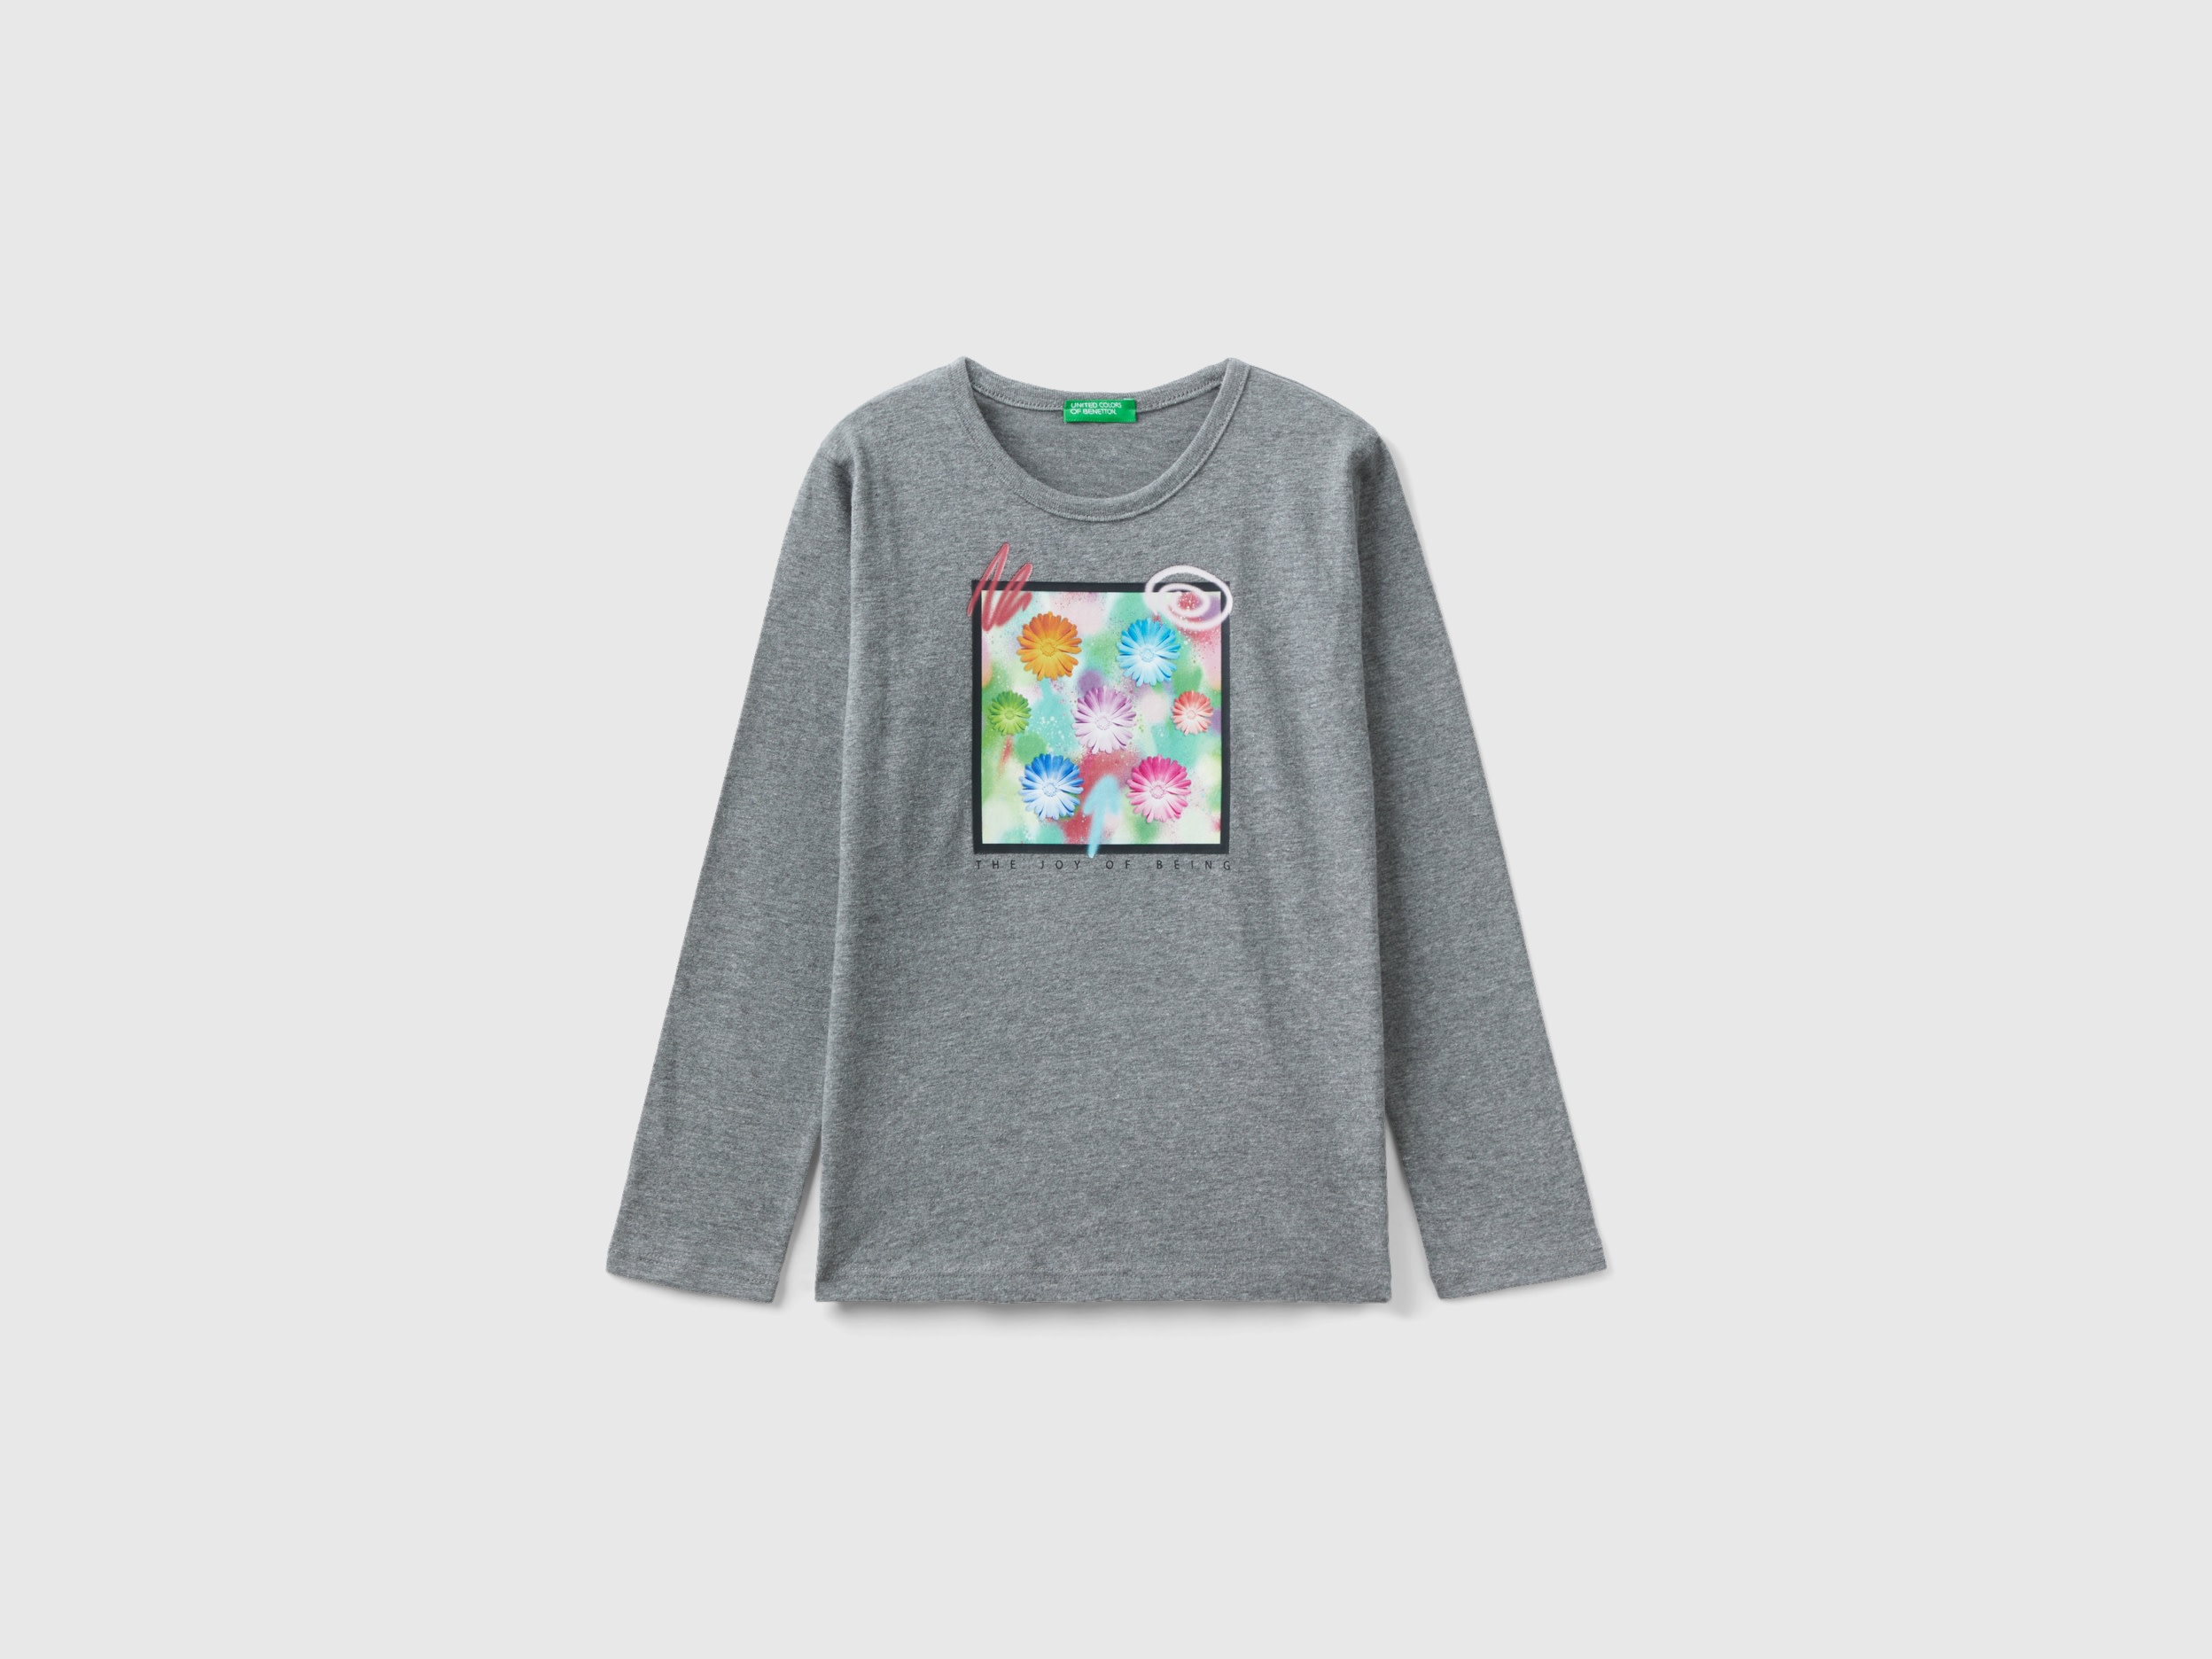 Benetton, Warm T-shirt With Photo Print, size 3XL, Dark Gray, Kids